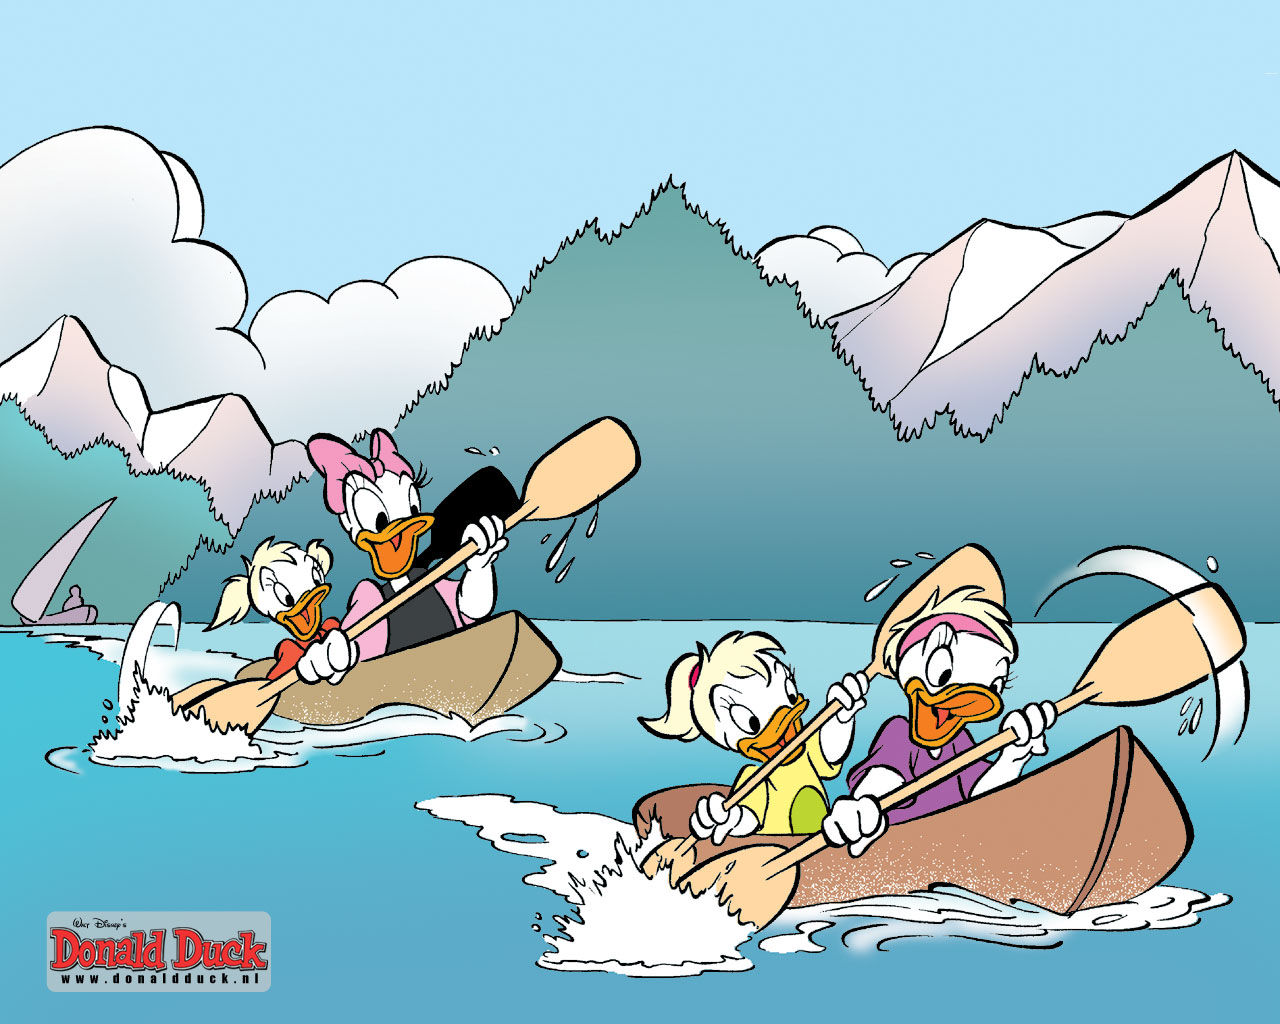 Donald duck et ses amis fonds ecran